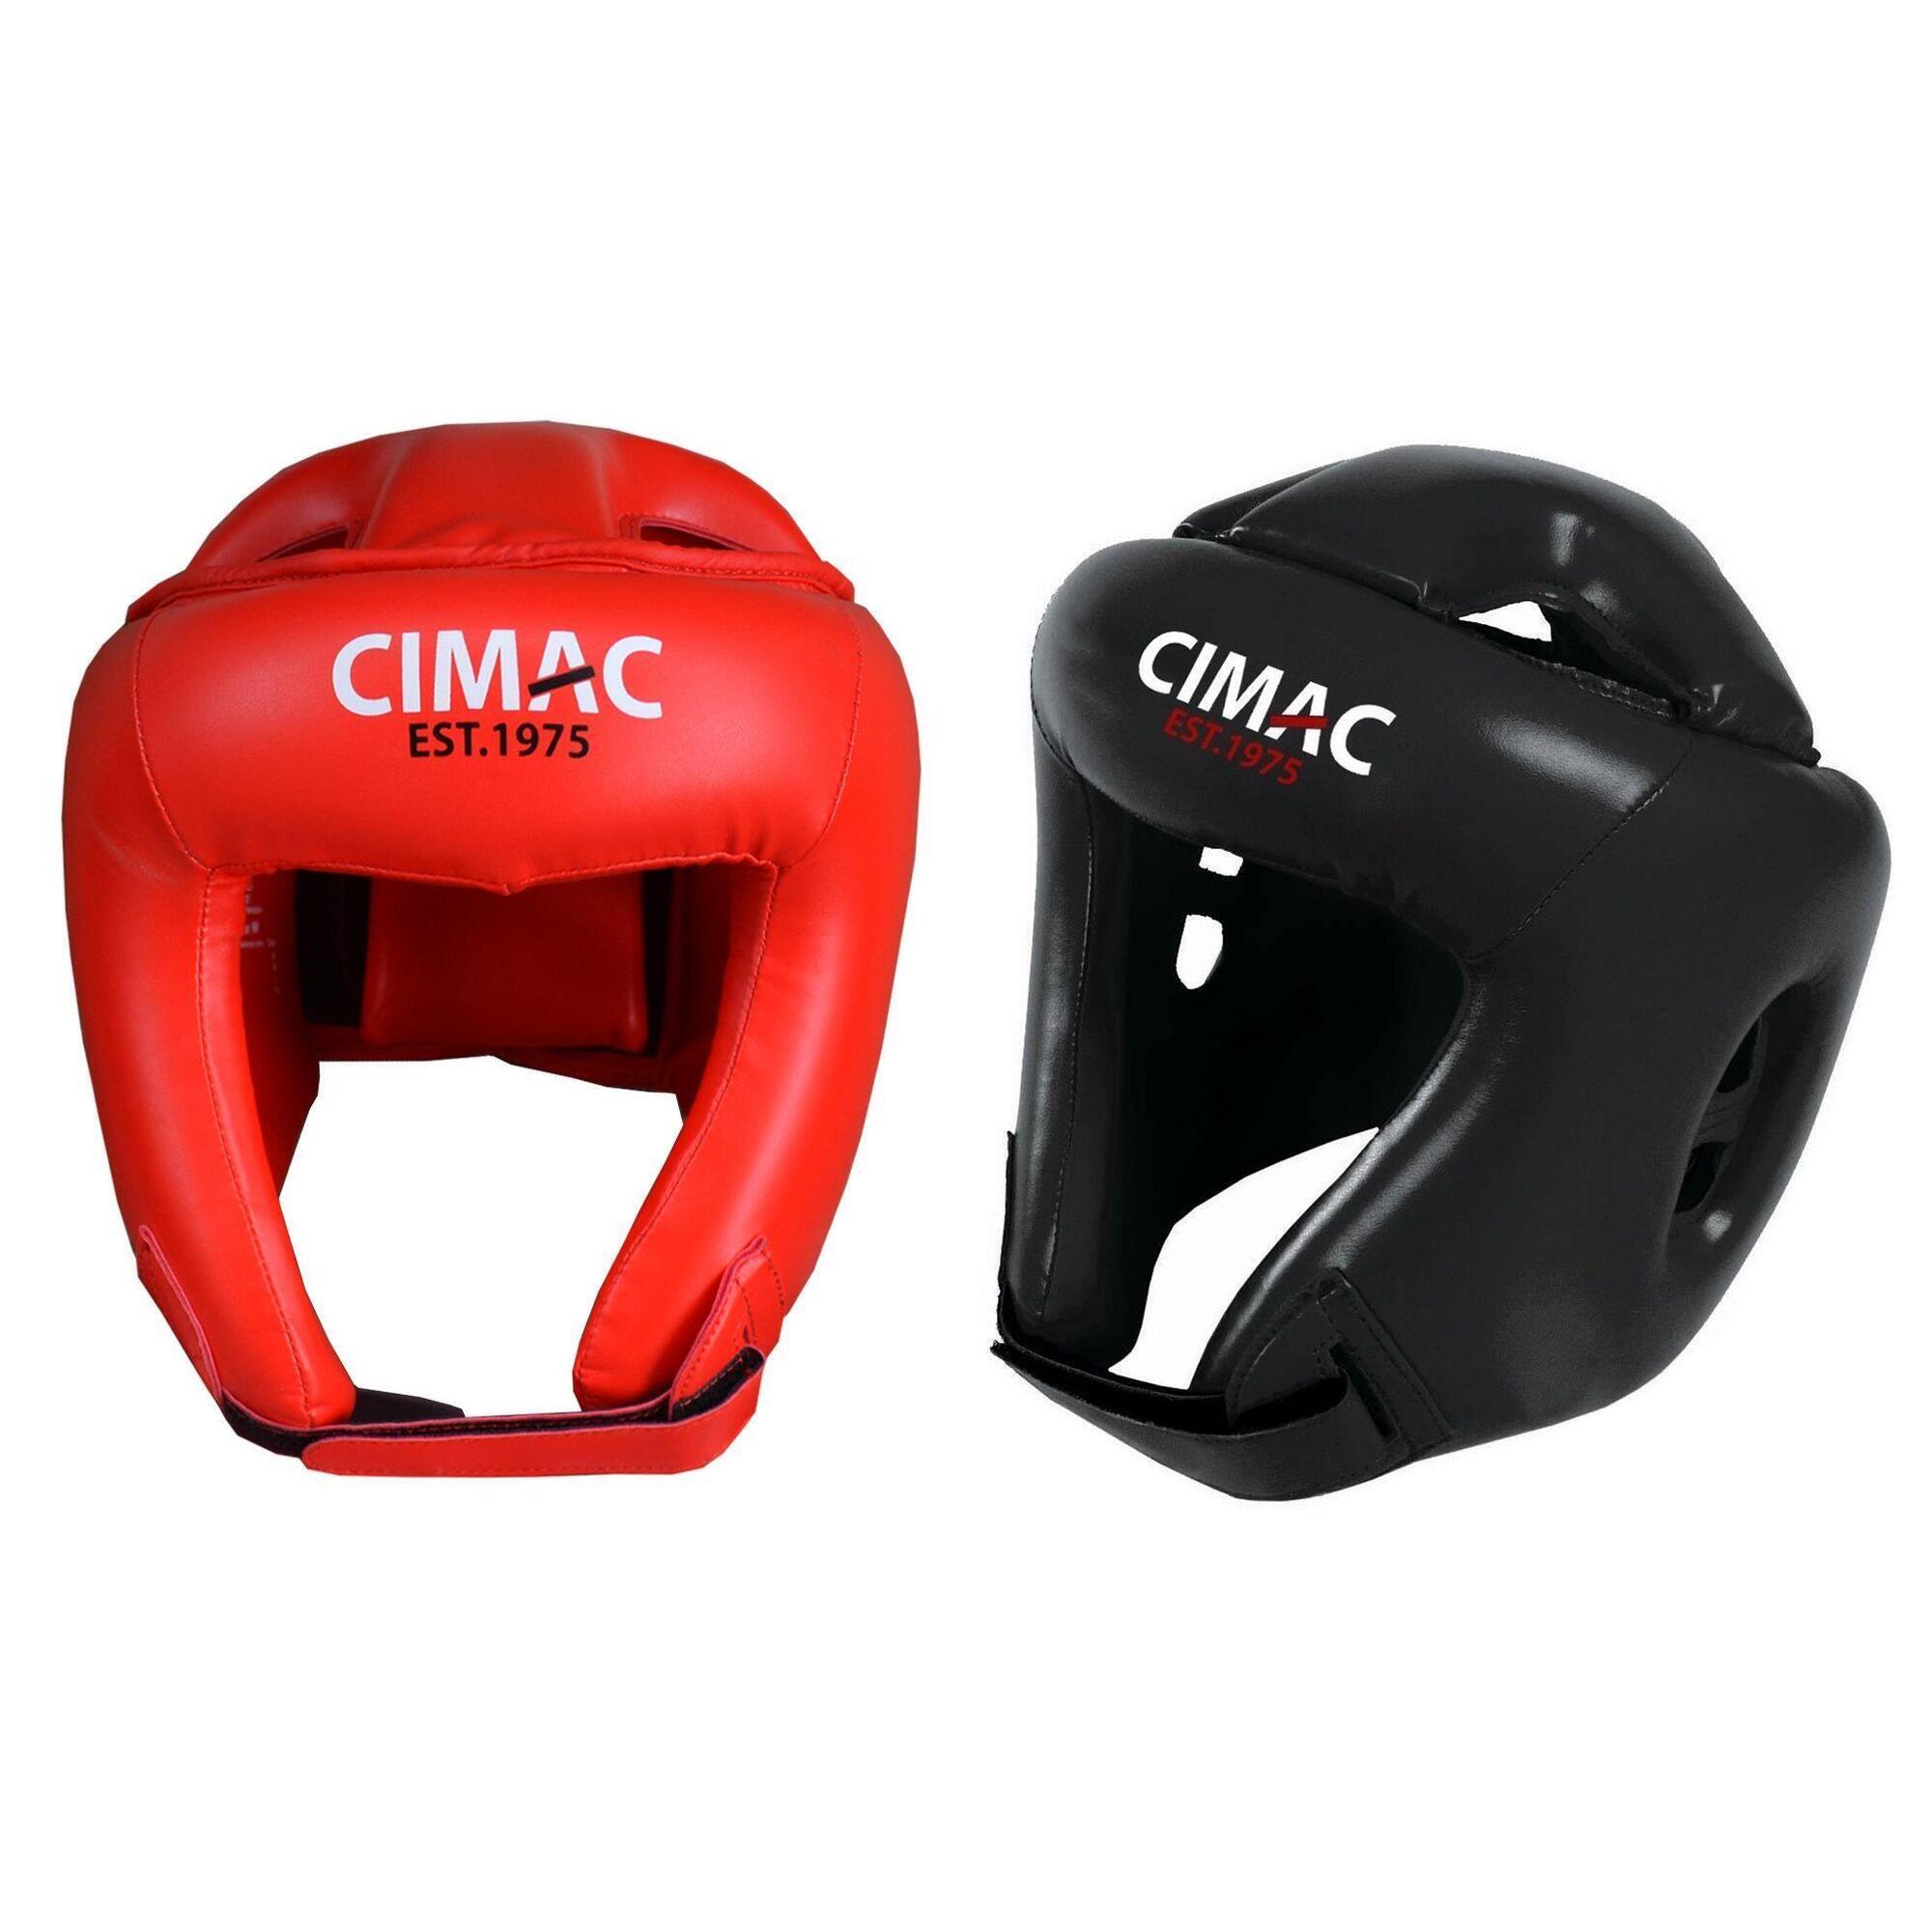 Cimac Open Face Boxing Head Guard 1/6